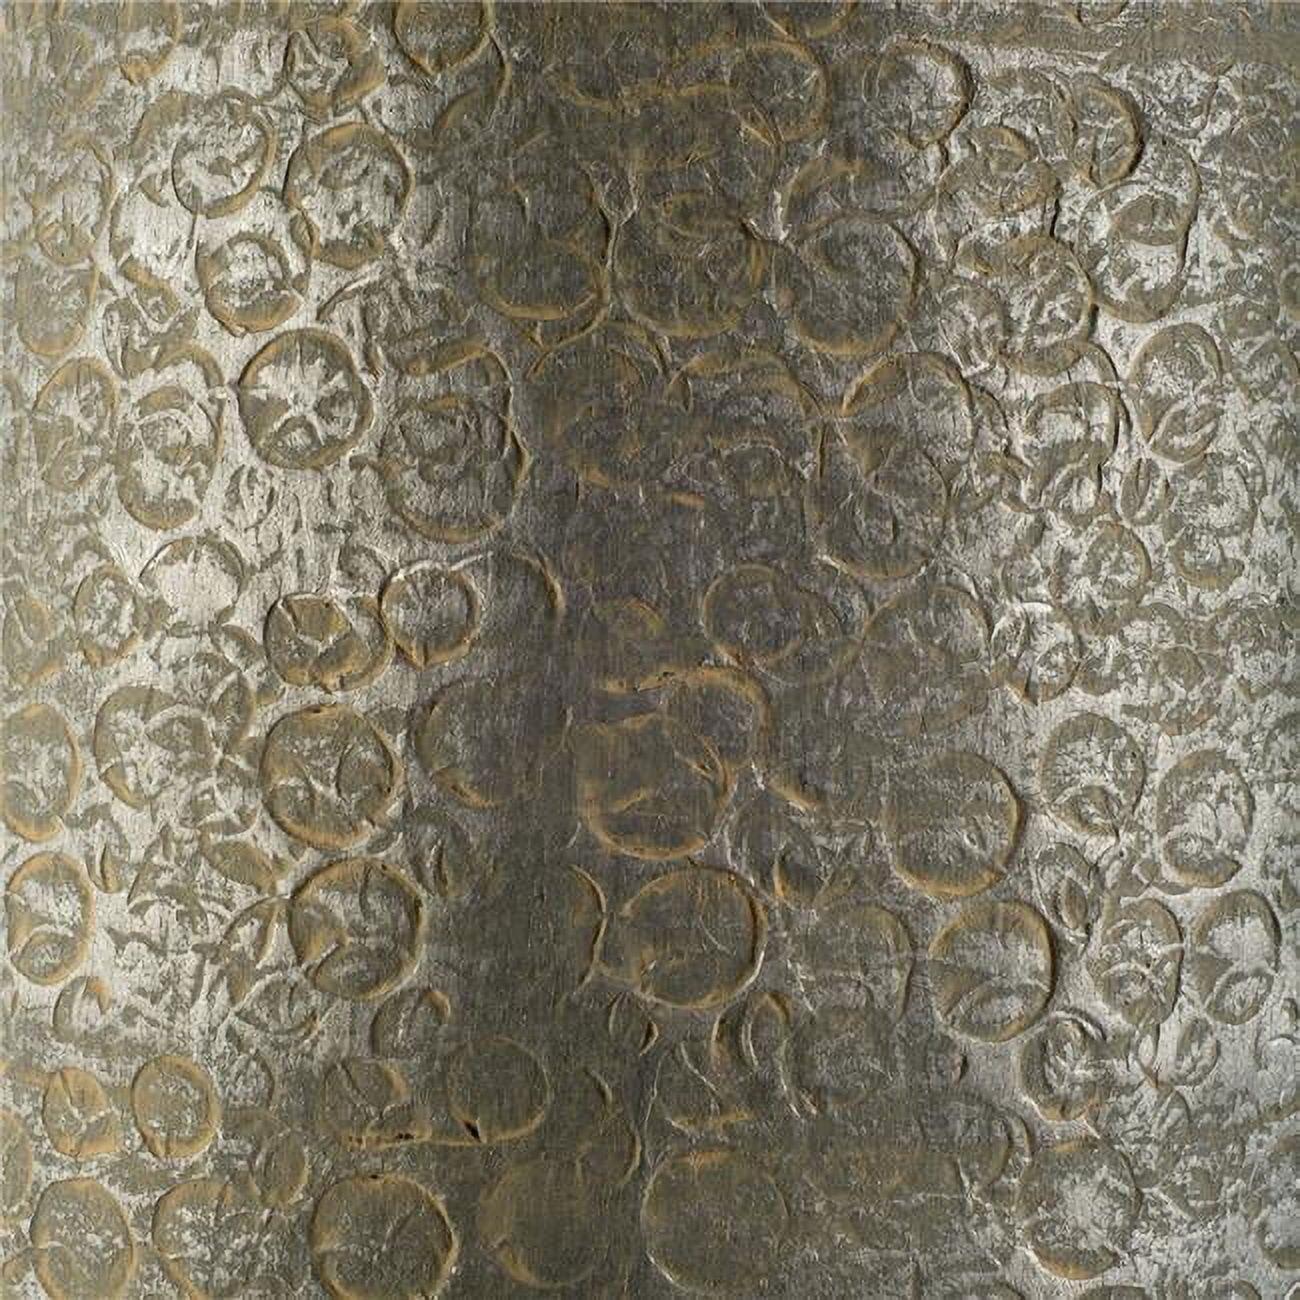 Rustic Gray and Gold Textured Ceramic Floor Vase